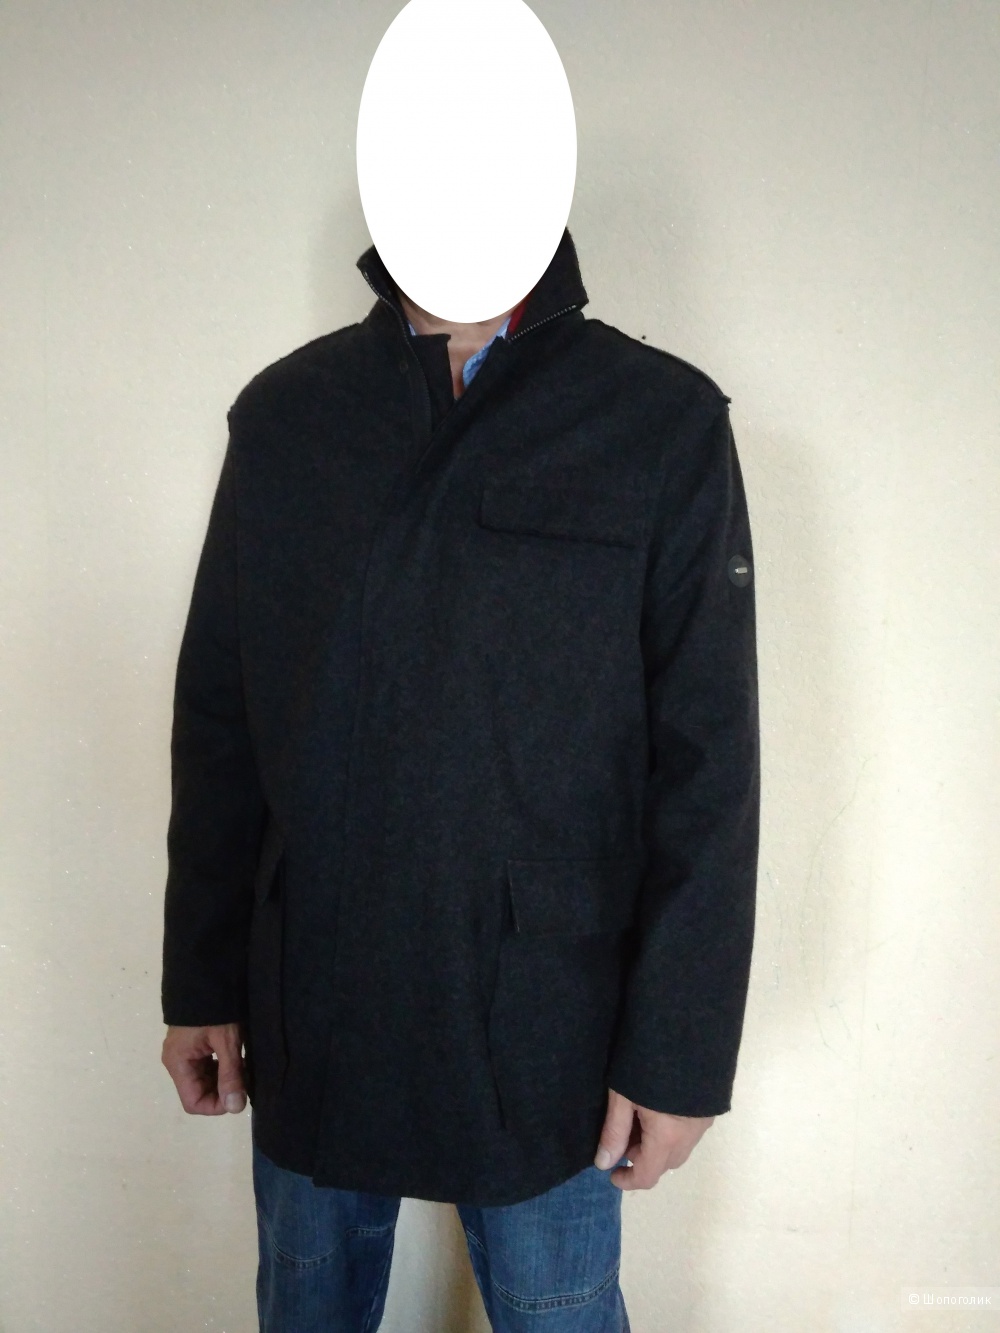 Мужская дизайнерская куртка-полупальто PETER WERTH р52